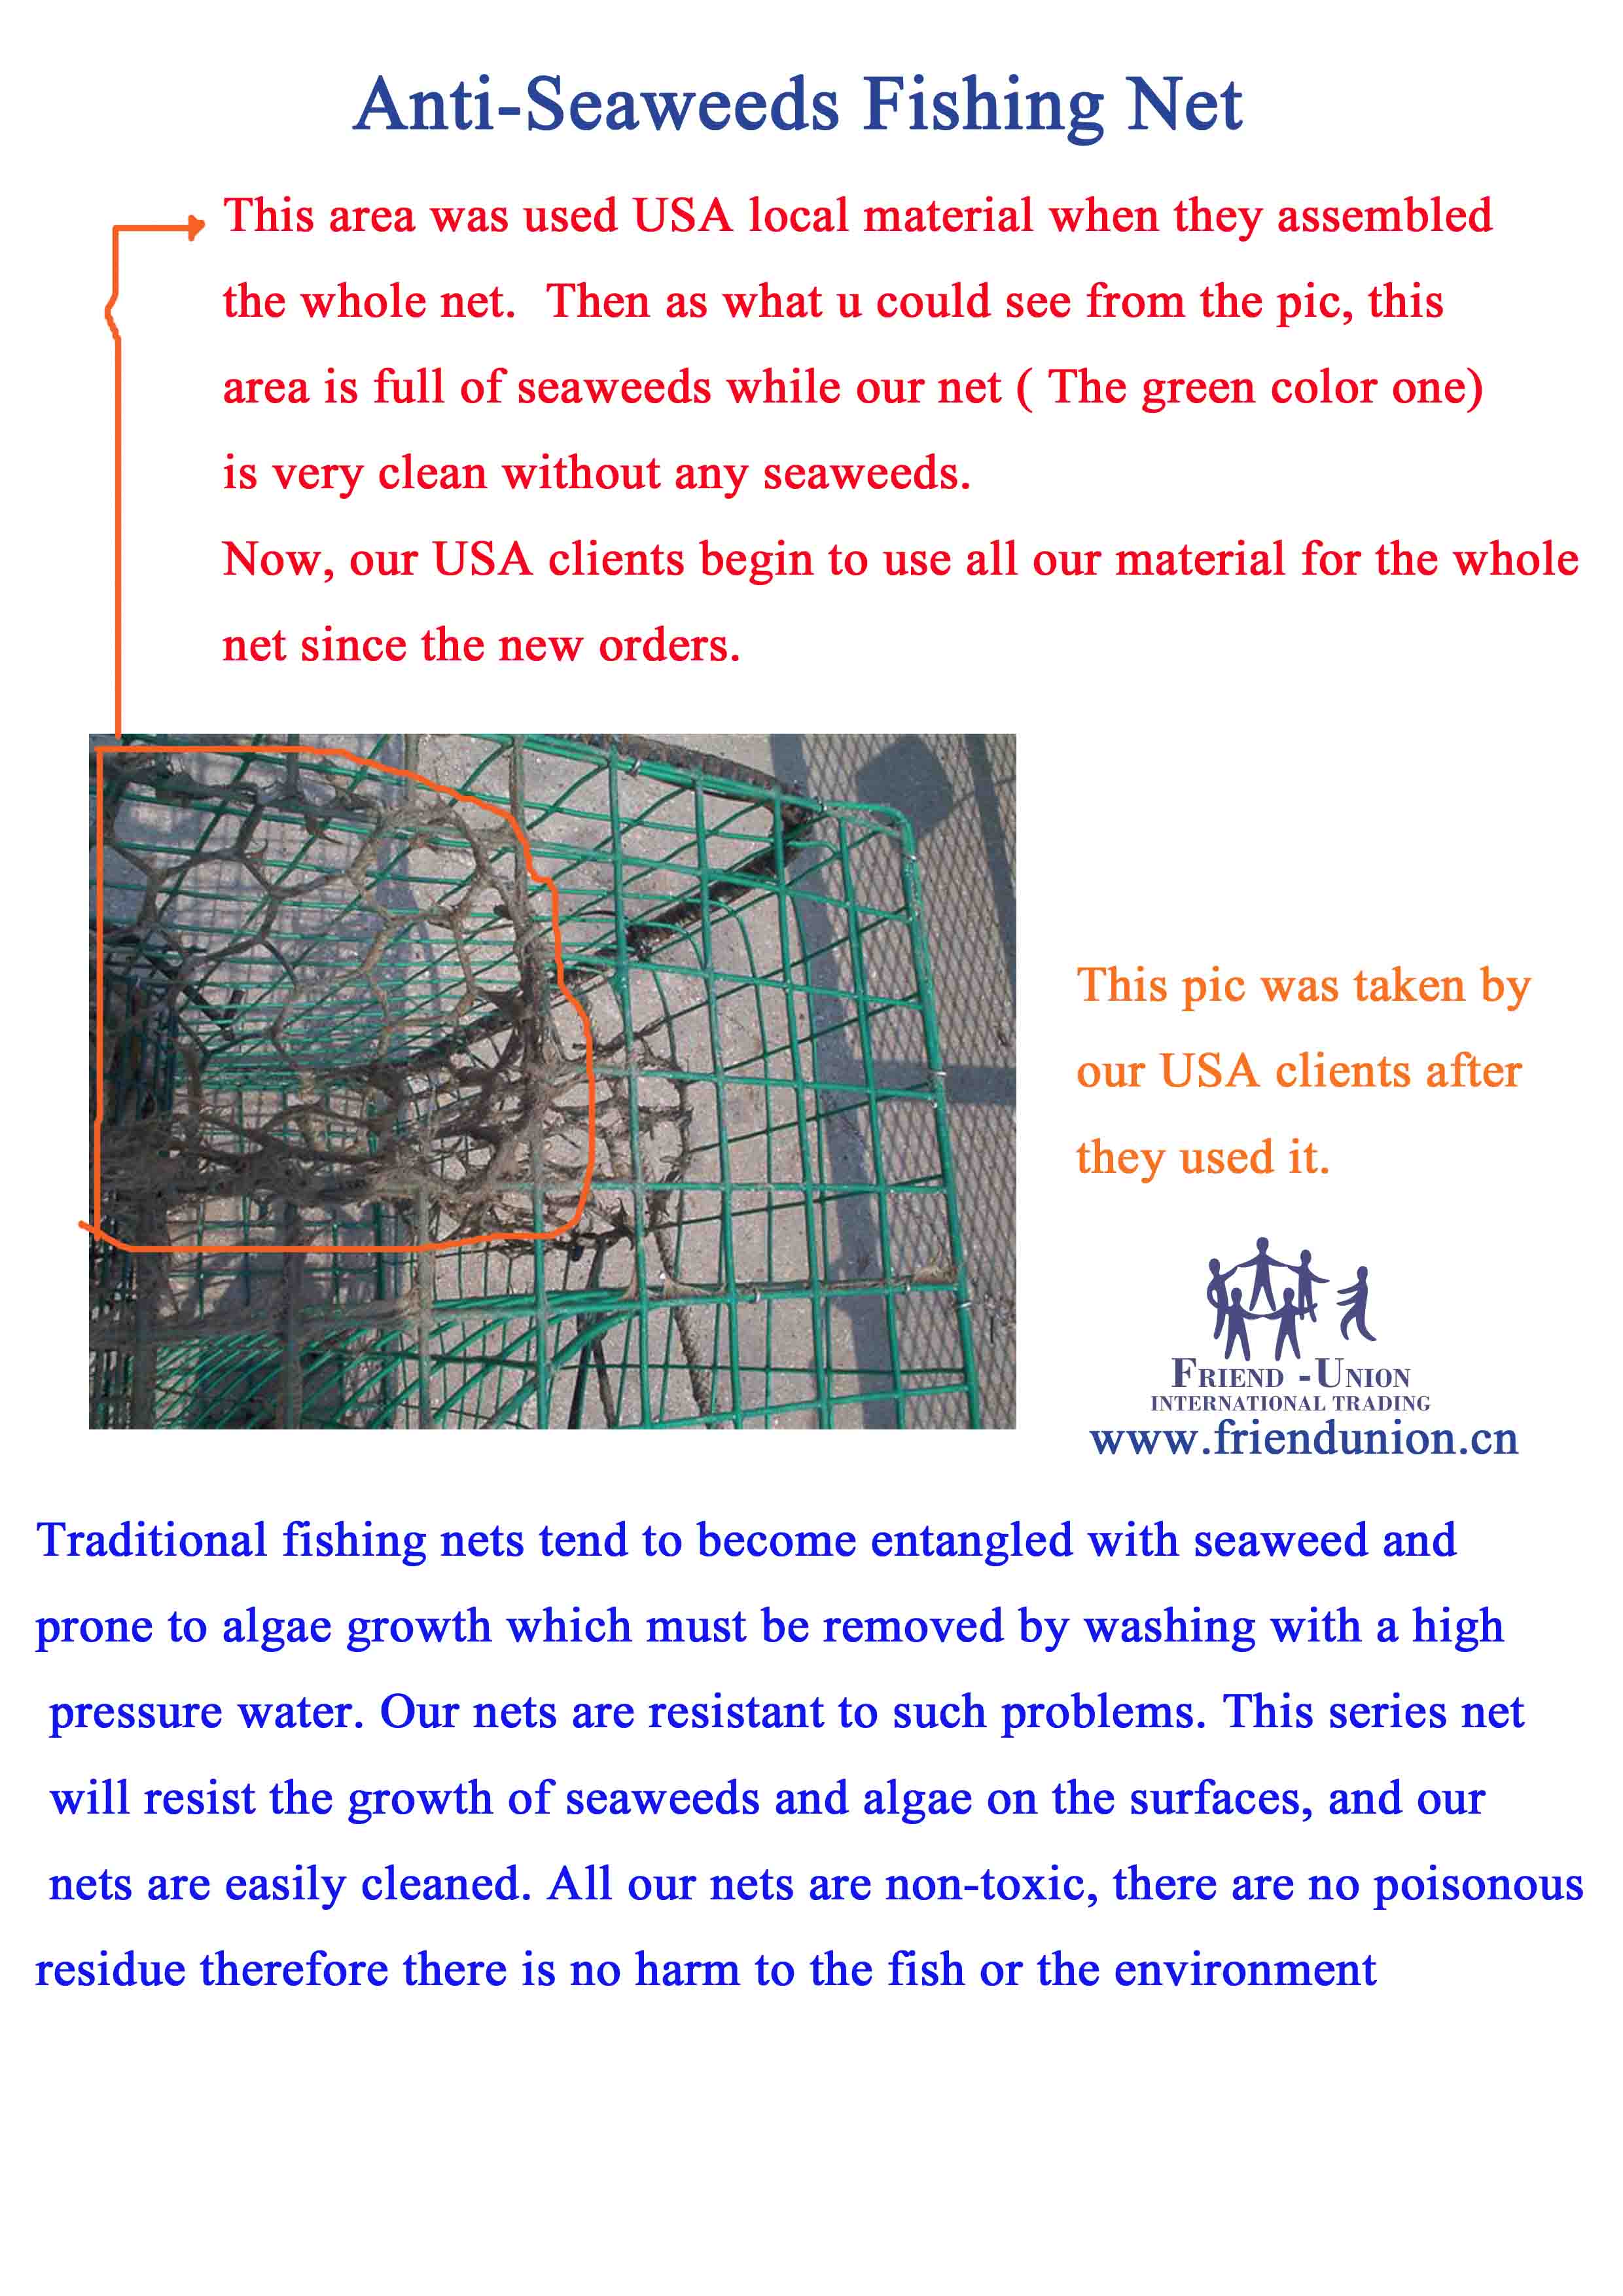 Fishing Net without growing Seaweeds